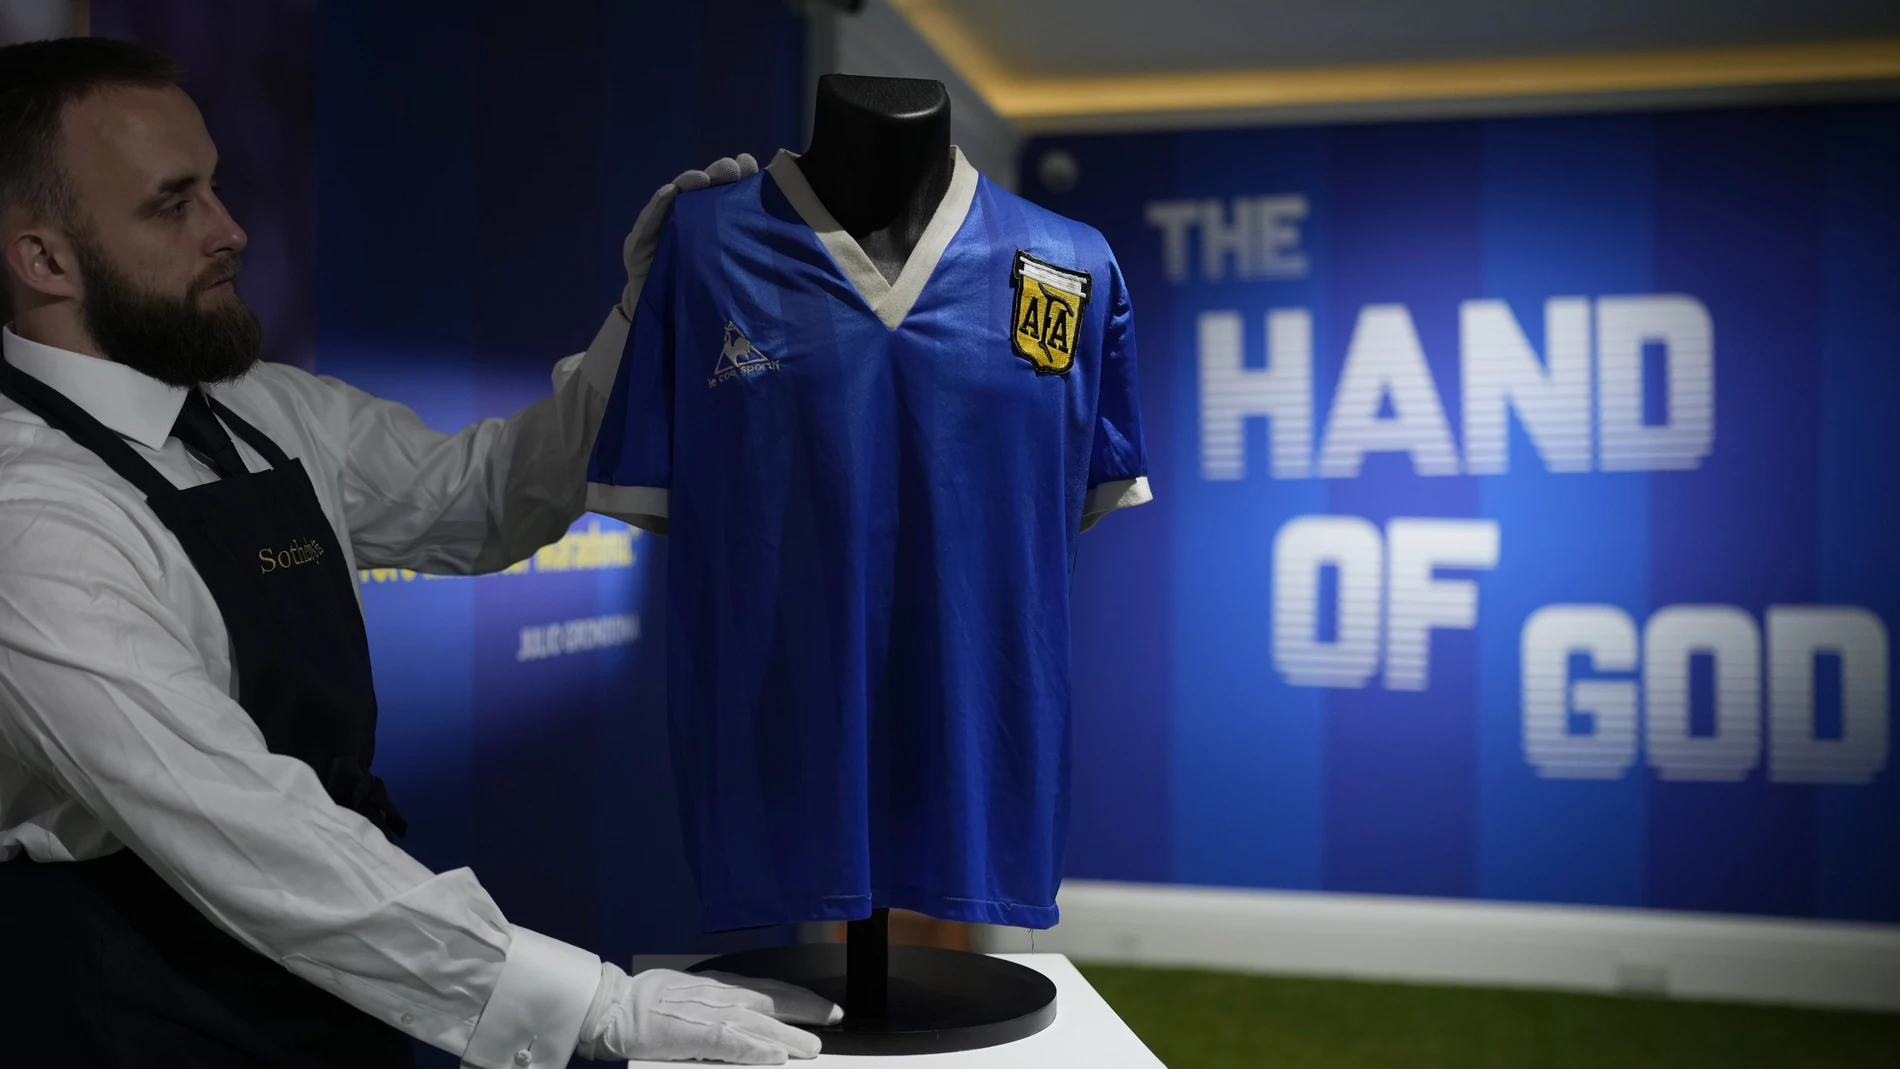 La camiseta de Maradona subastada ayer en Sotheby's. (AP Photo/Matt Dunham, File)